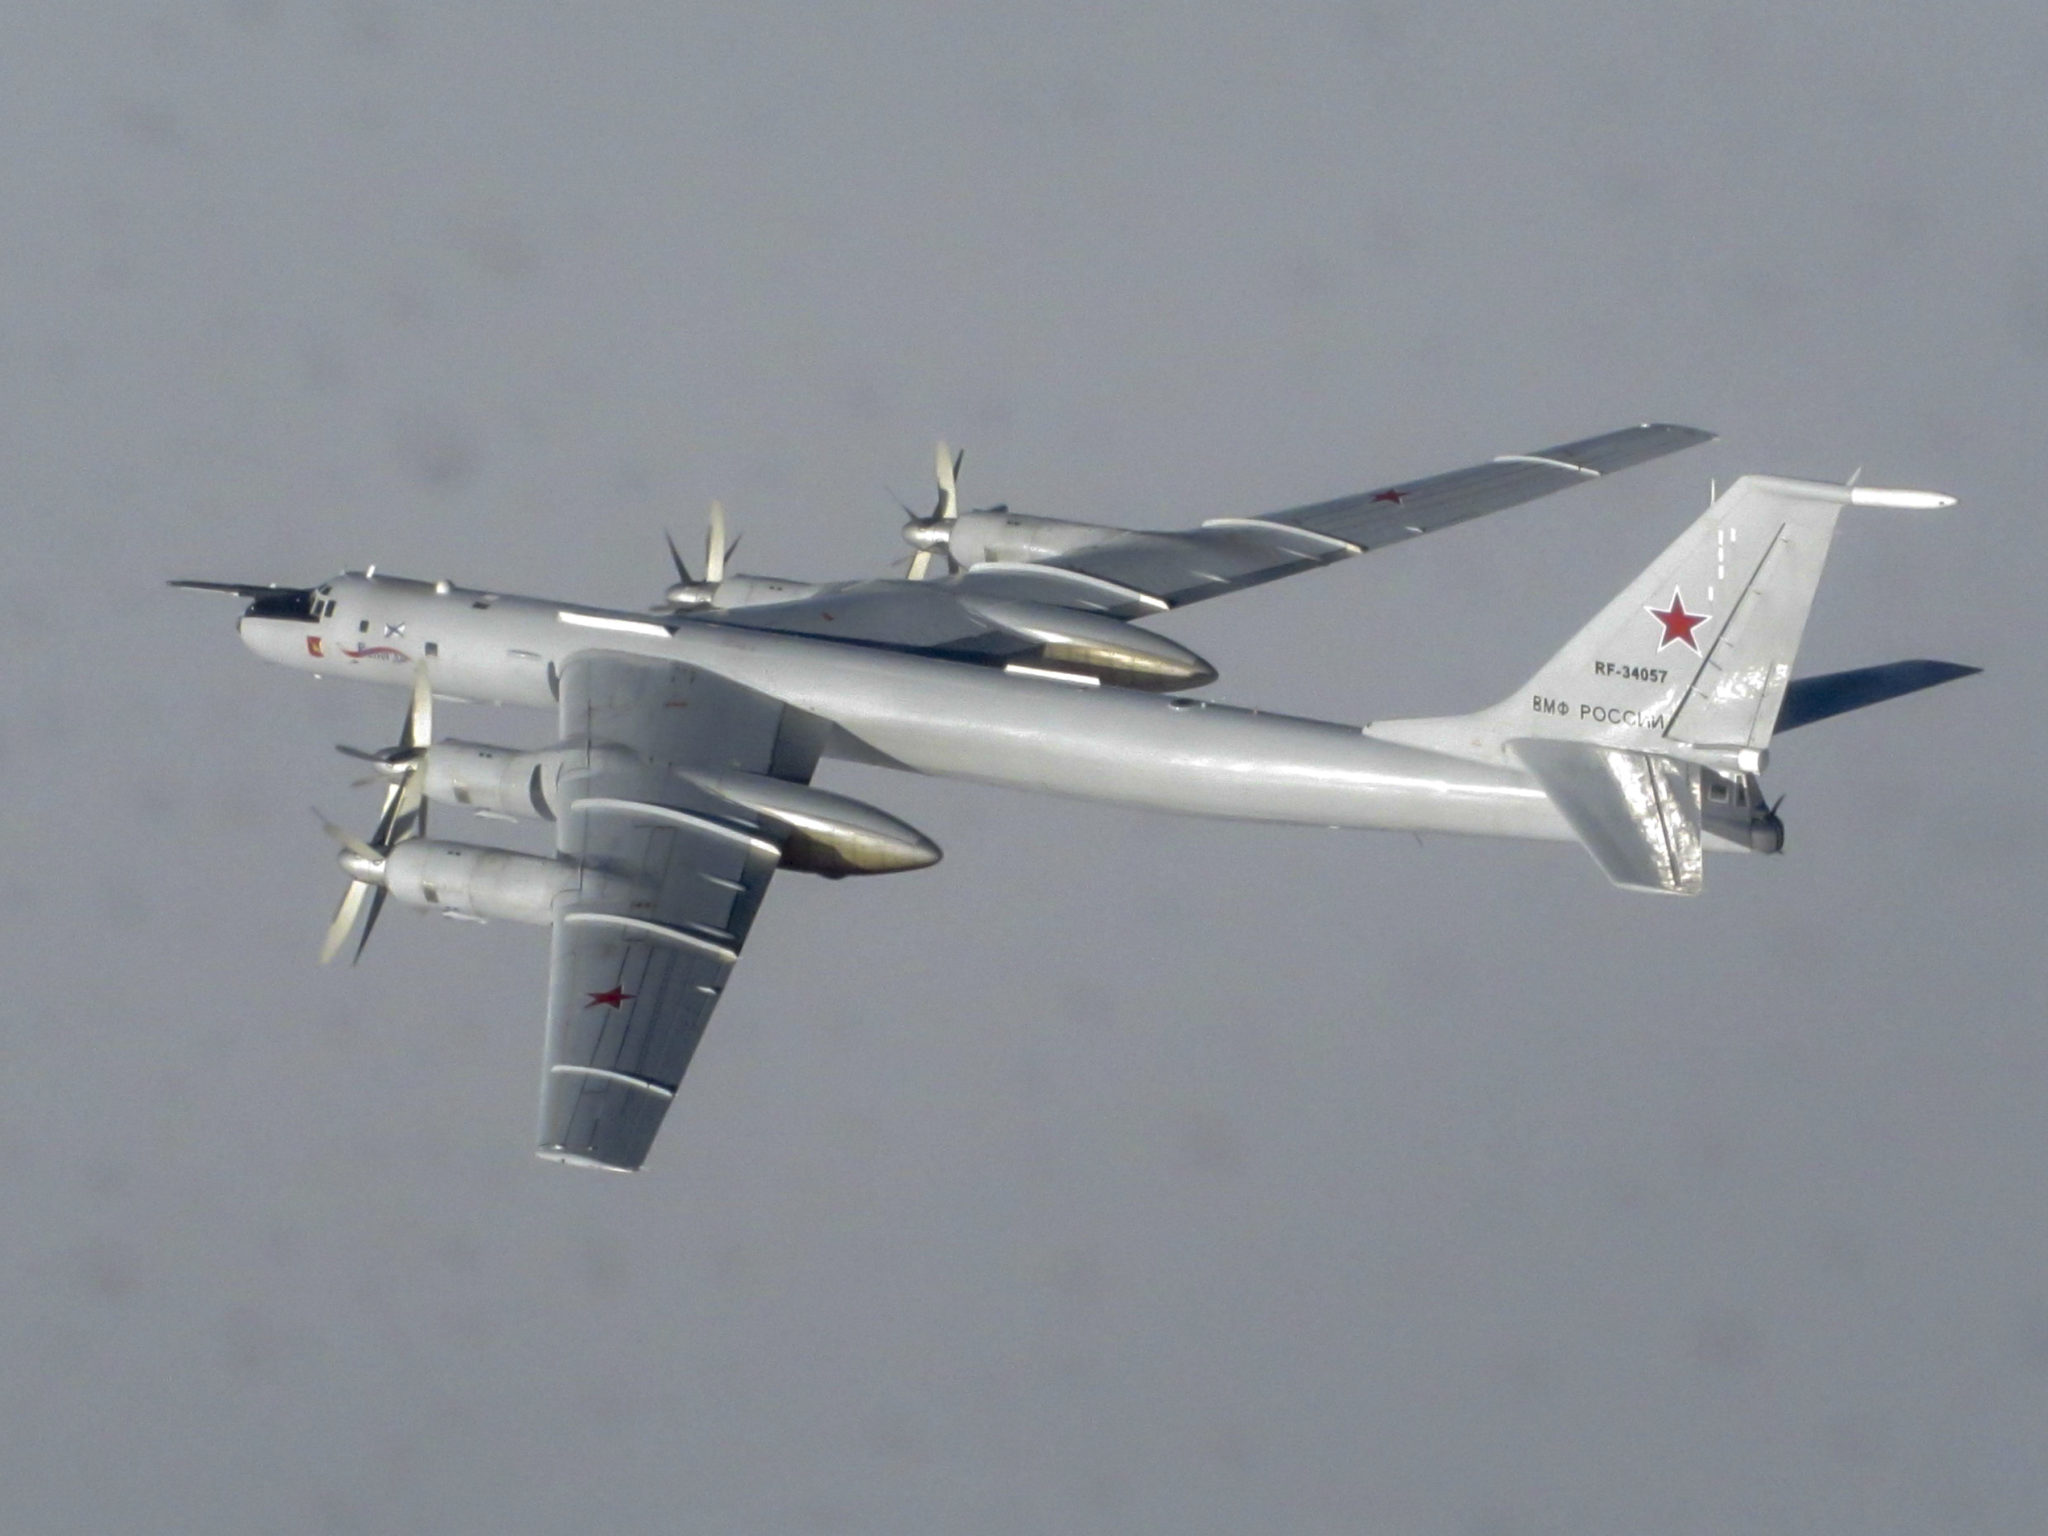 RAF Intercept Russian Aircraft